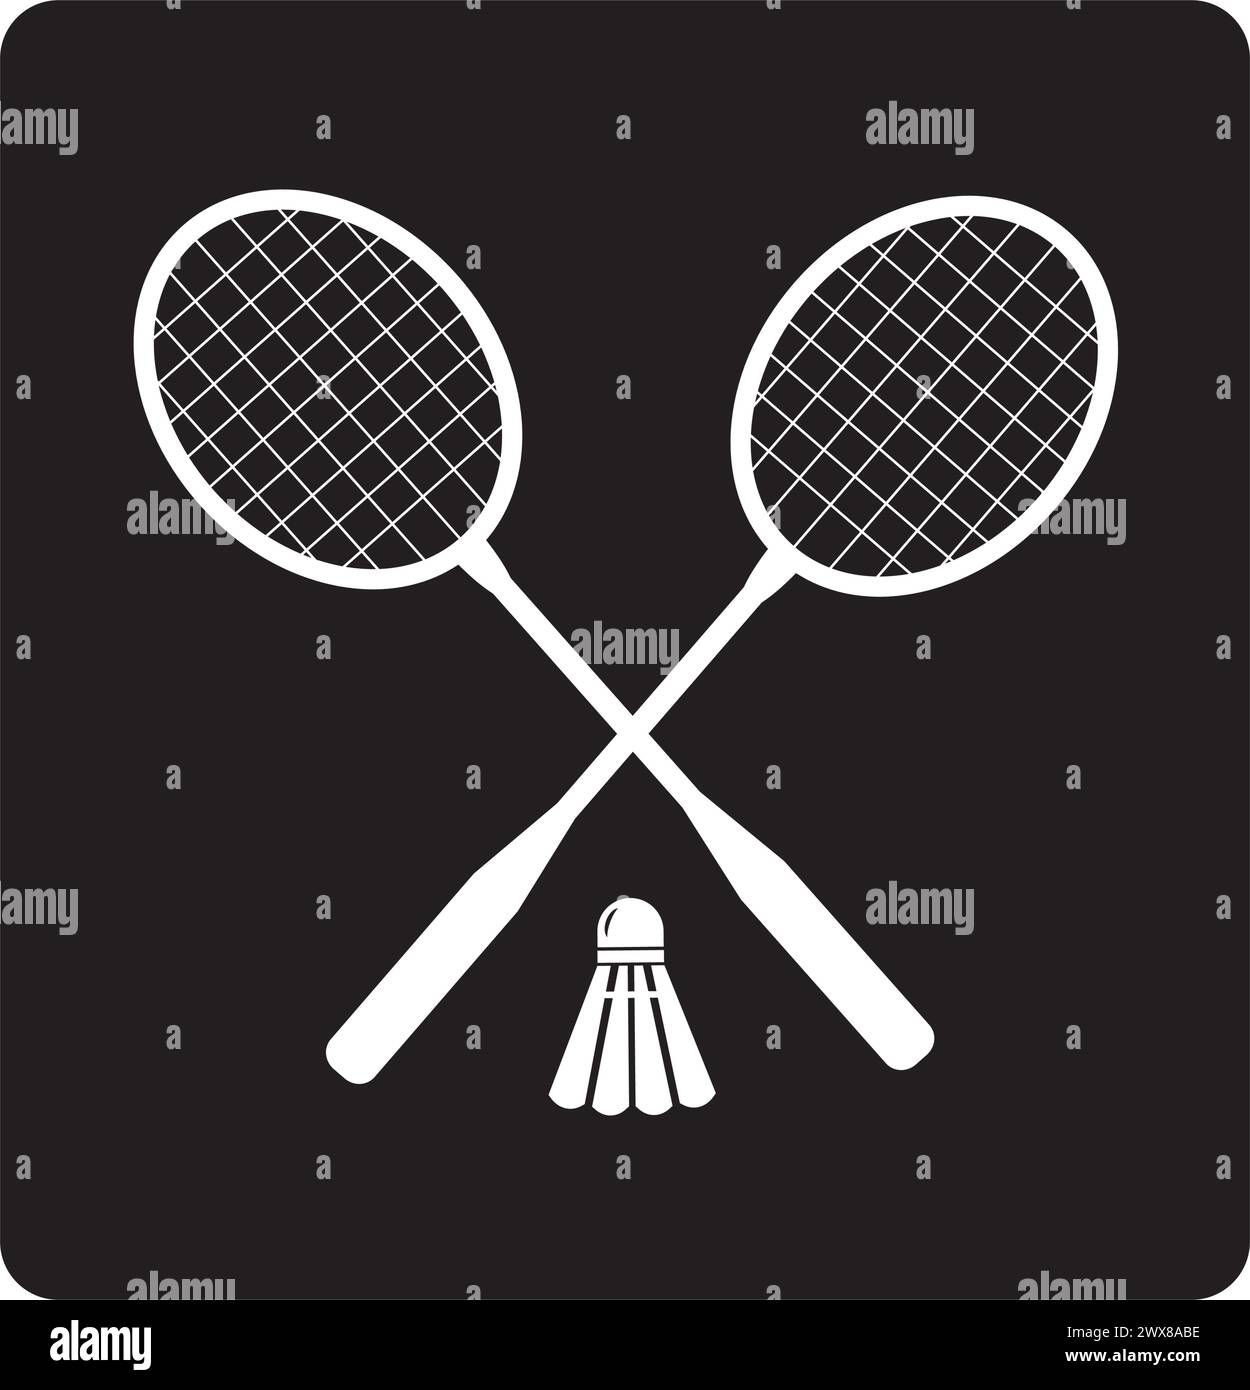 badminton racket icon vector illustration logo design Stock Vector